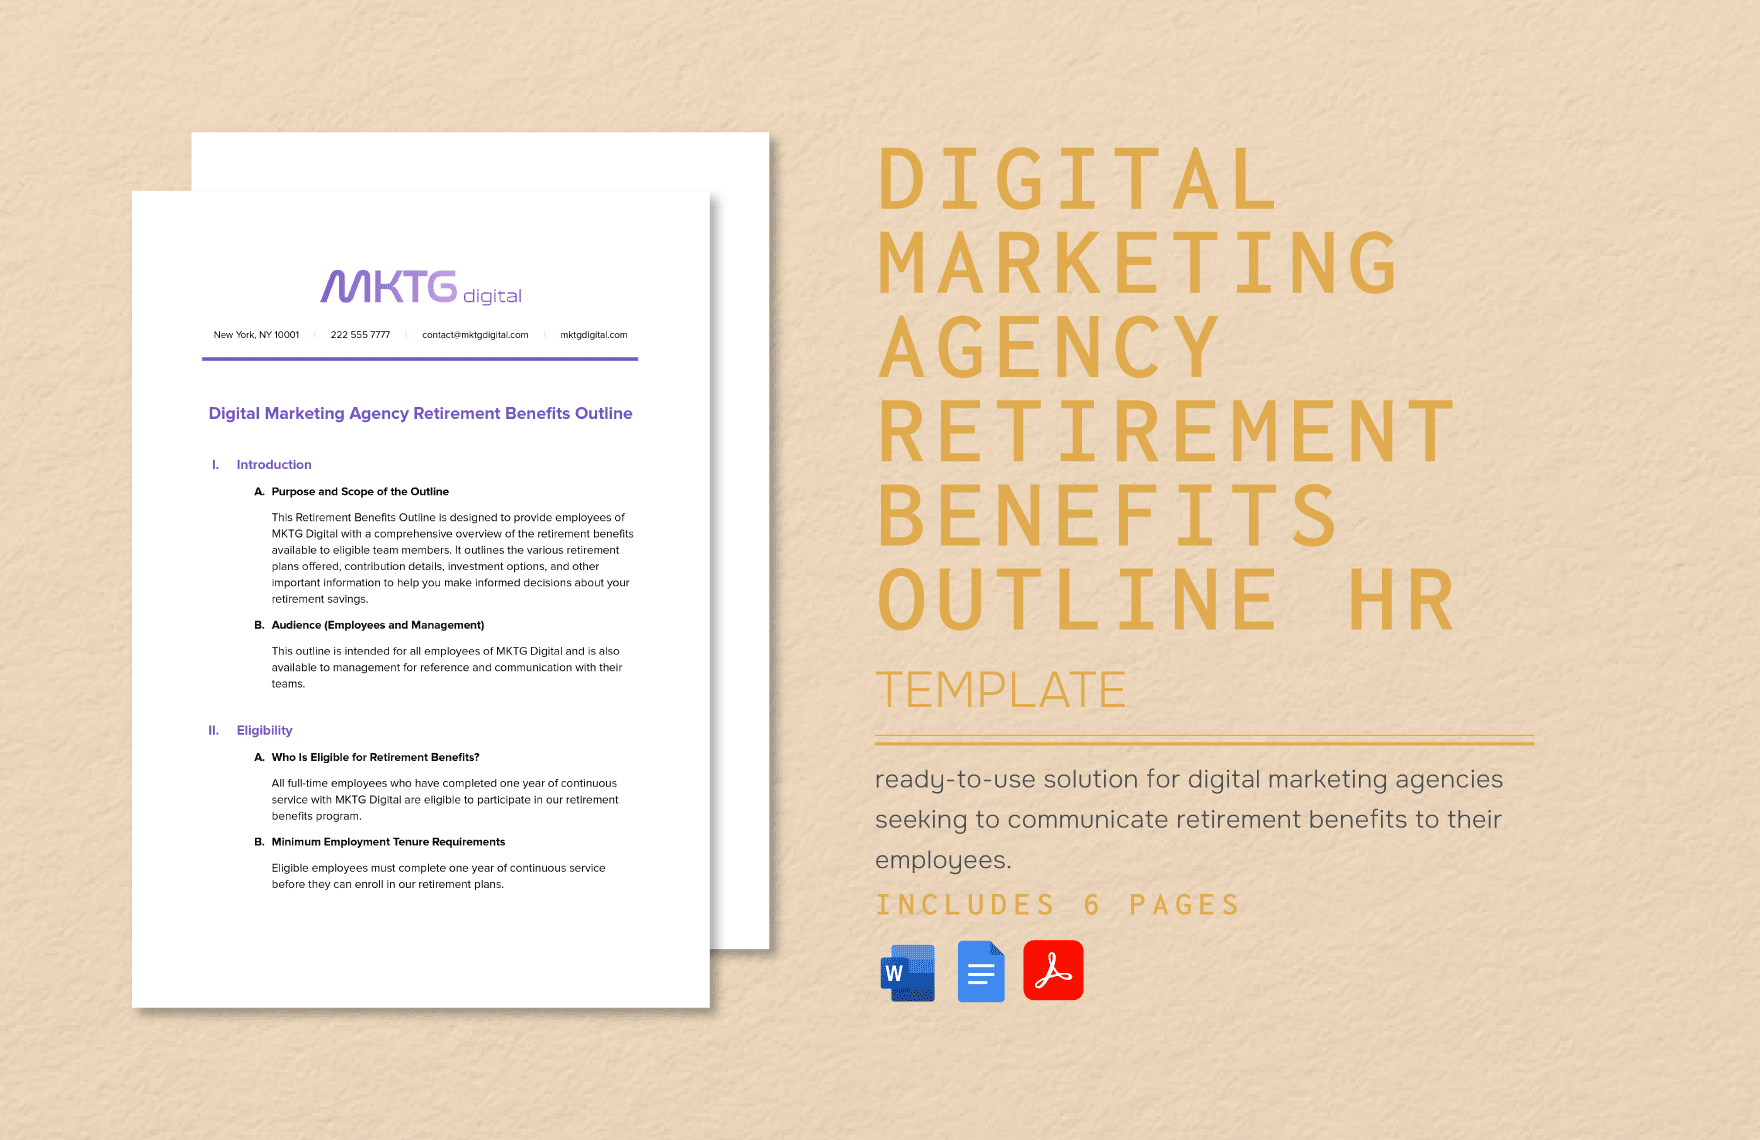 Digital Marketing Agency Retirement Benefits Outline HR Template